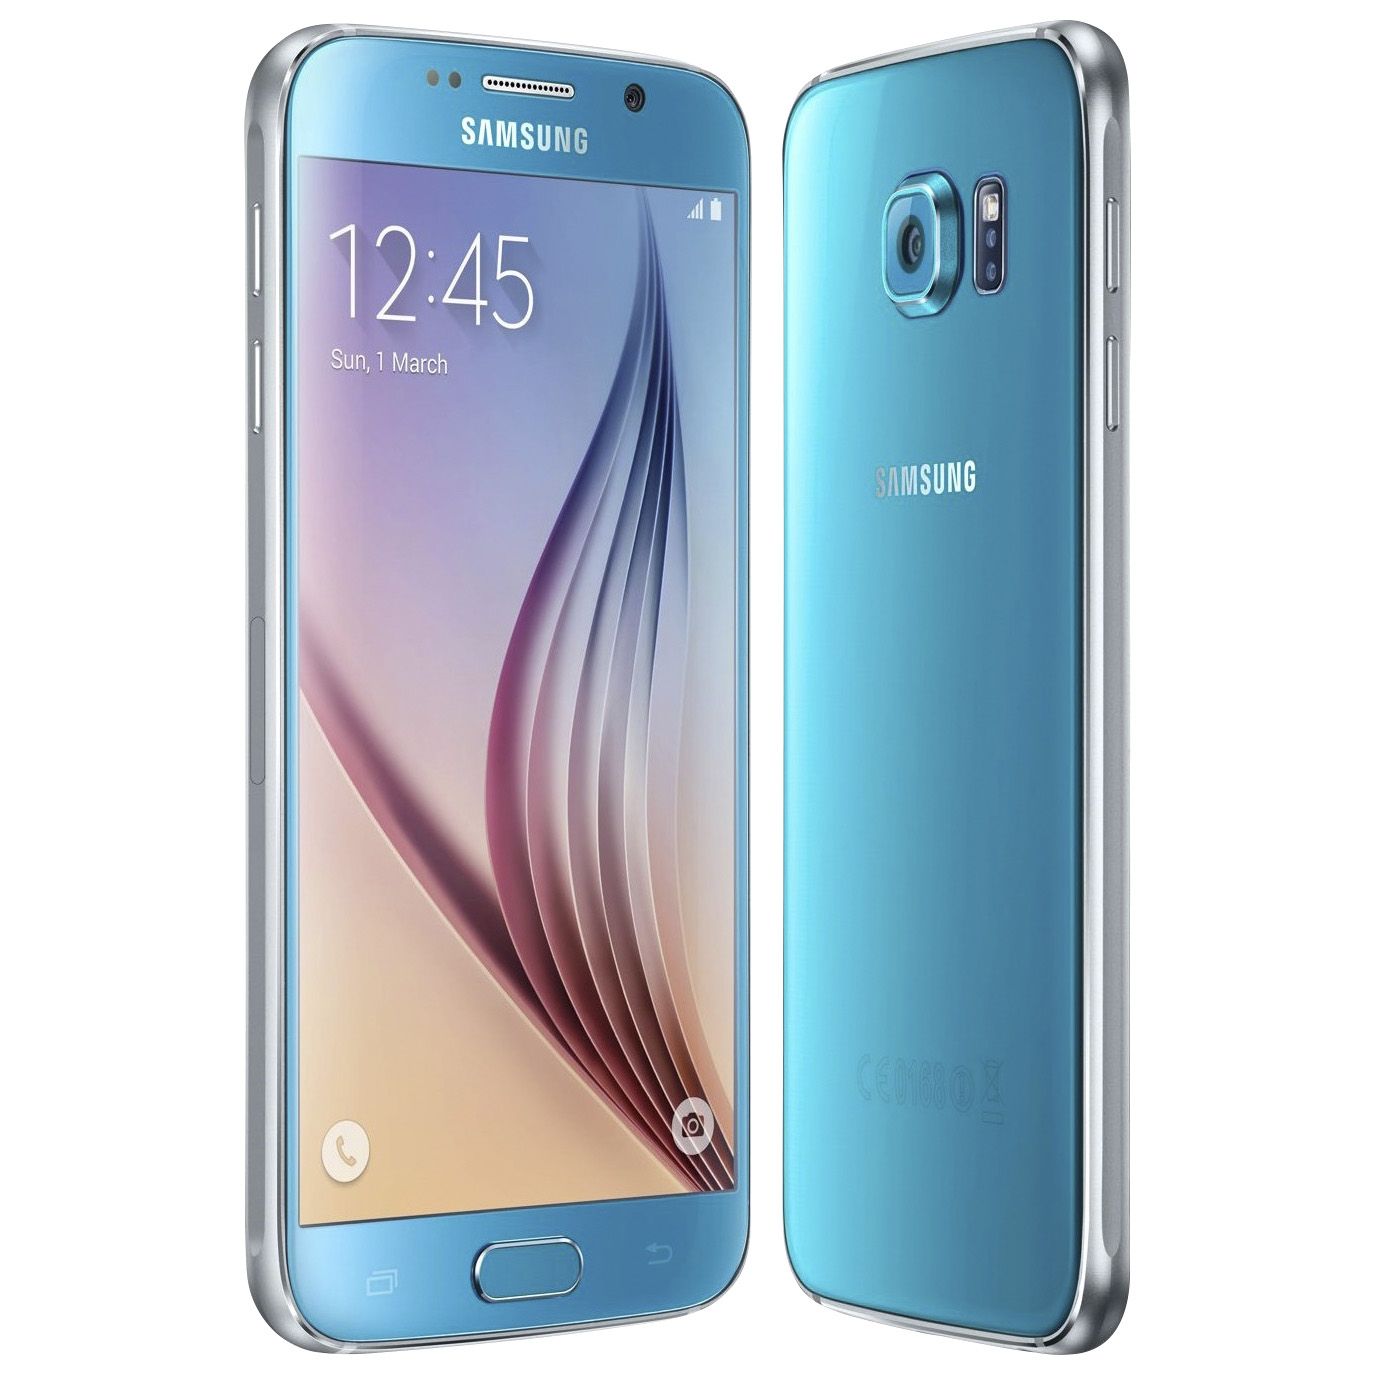 herhaling afbetalen dood gaan Fingerhut - Samsung Galaxy S6 32GB Unlocked Android Smartphone